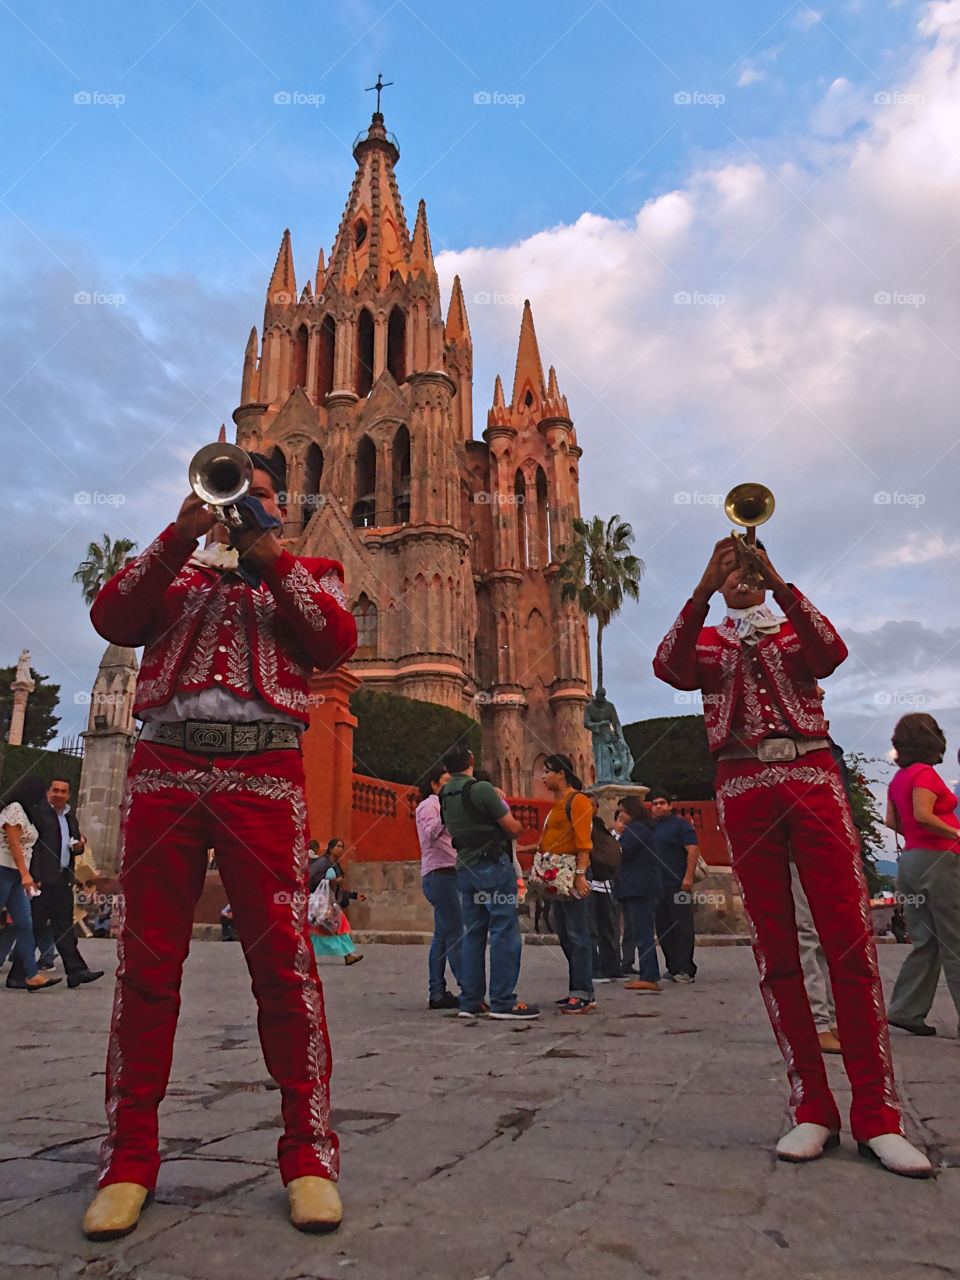 Mariachi musicians performing in the downtown area on front of the church "Parroquia de San Miguel Arcangel" of San Miguel de Allende, Guanajuato, Mexico